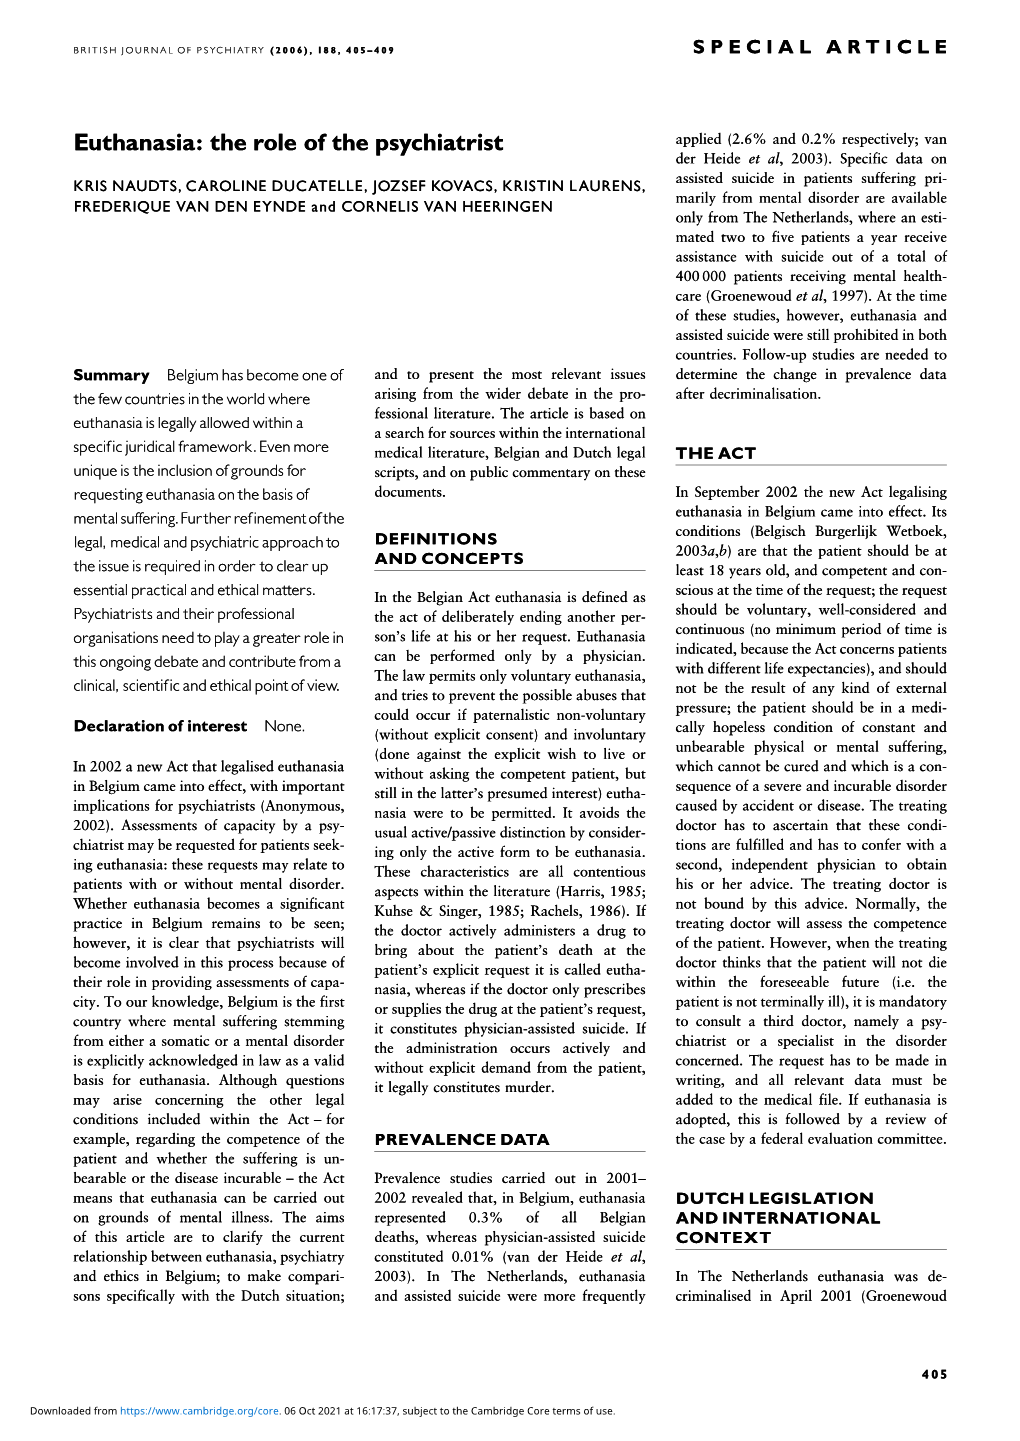 Euthanasia: the Role of the Psychiatrist Applied (2.6% and 0.2% Respectively; Van Der Heidederheide Et Aletal, 2003)